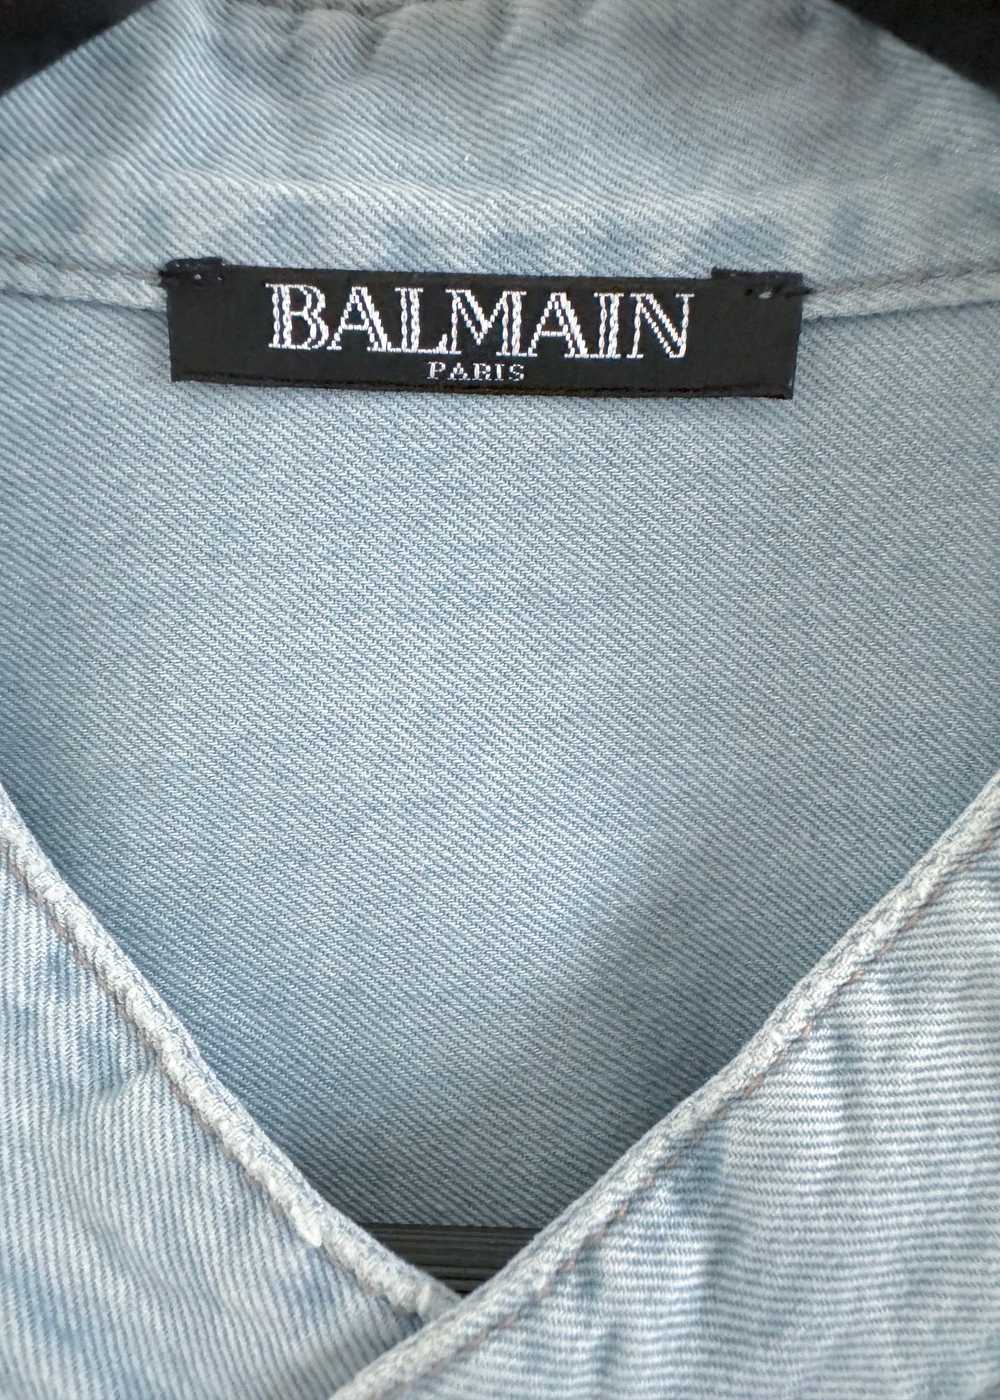 Balmain Balmain Mao Collar Denim Shirt - image 5